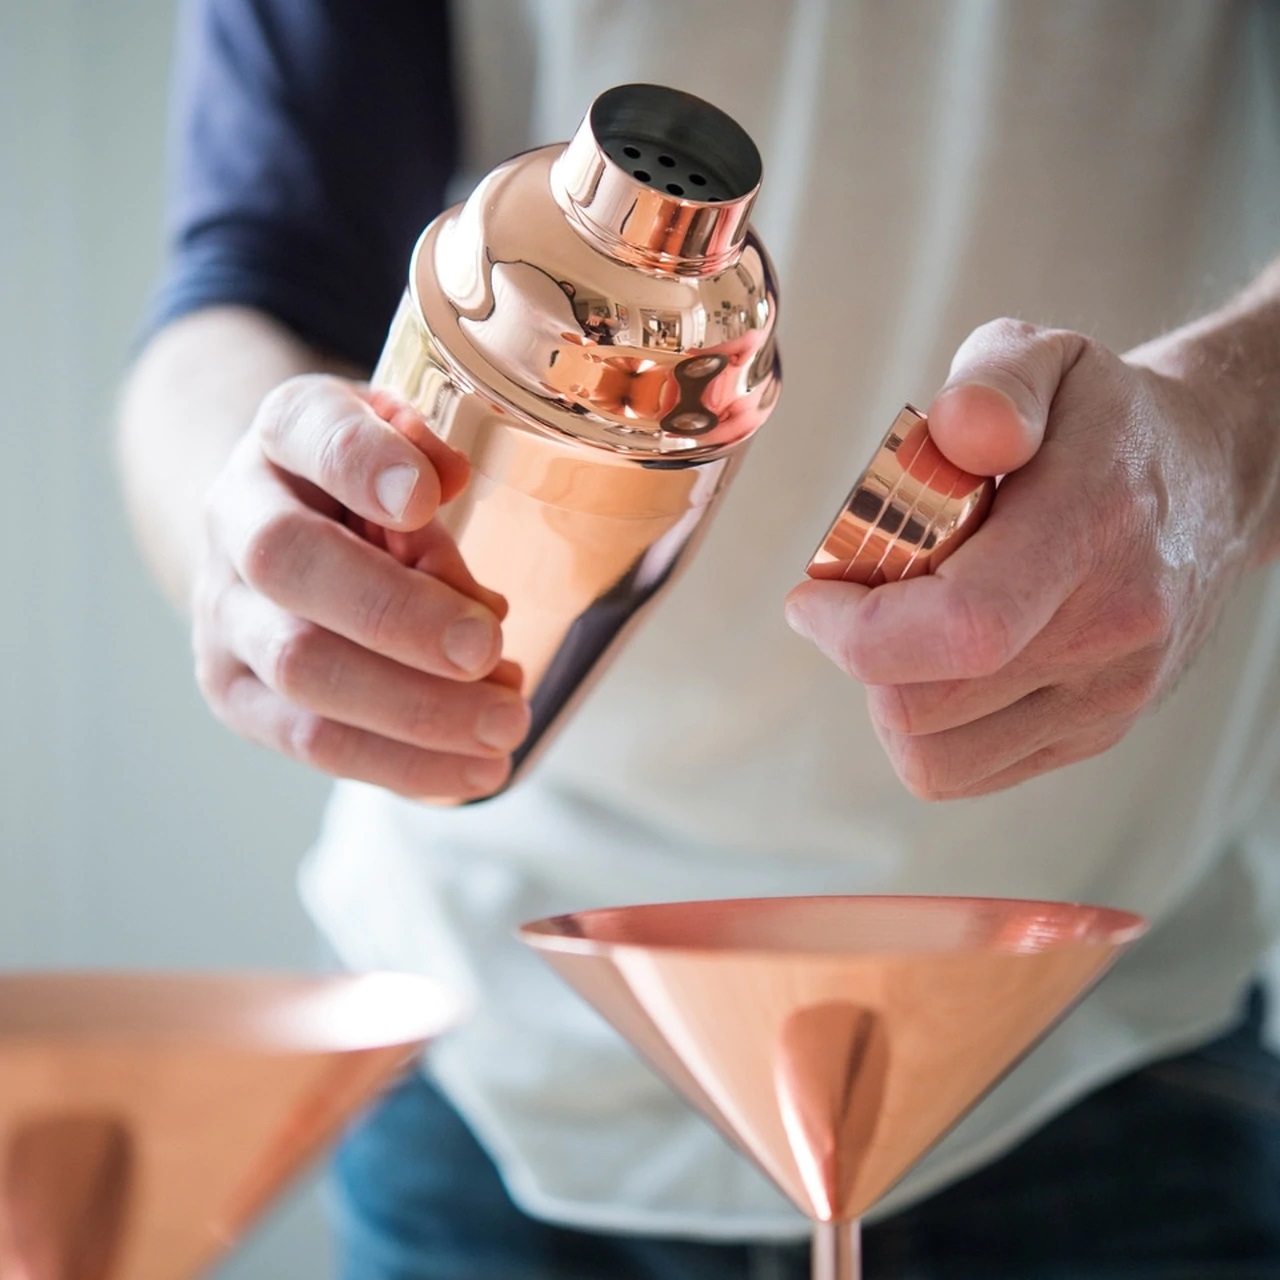 Cobbler Copper Cocktail Shaker